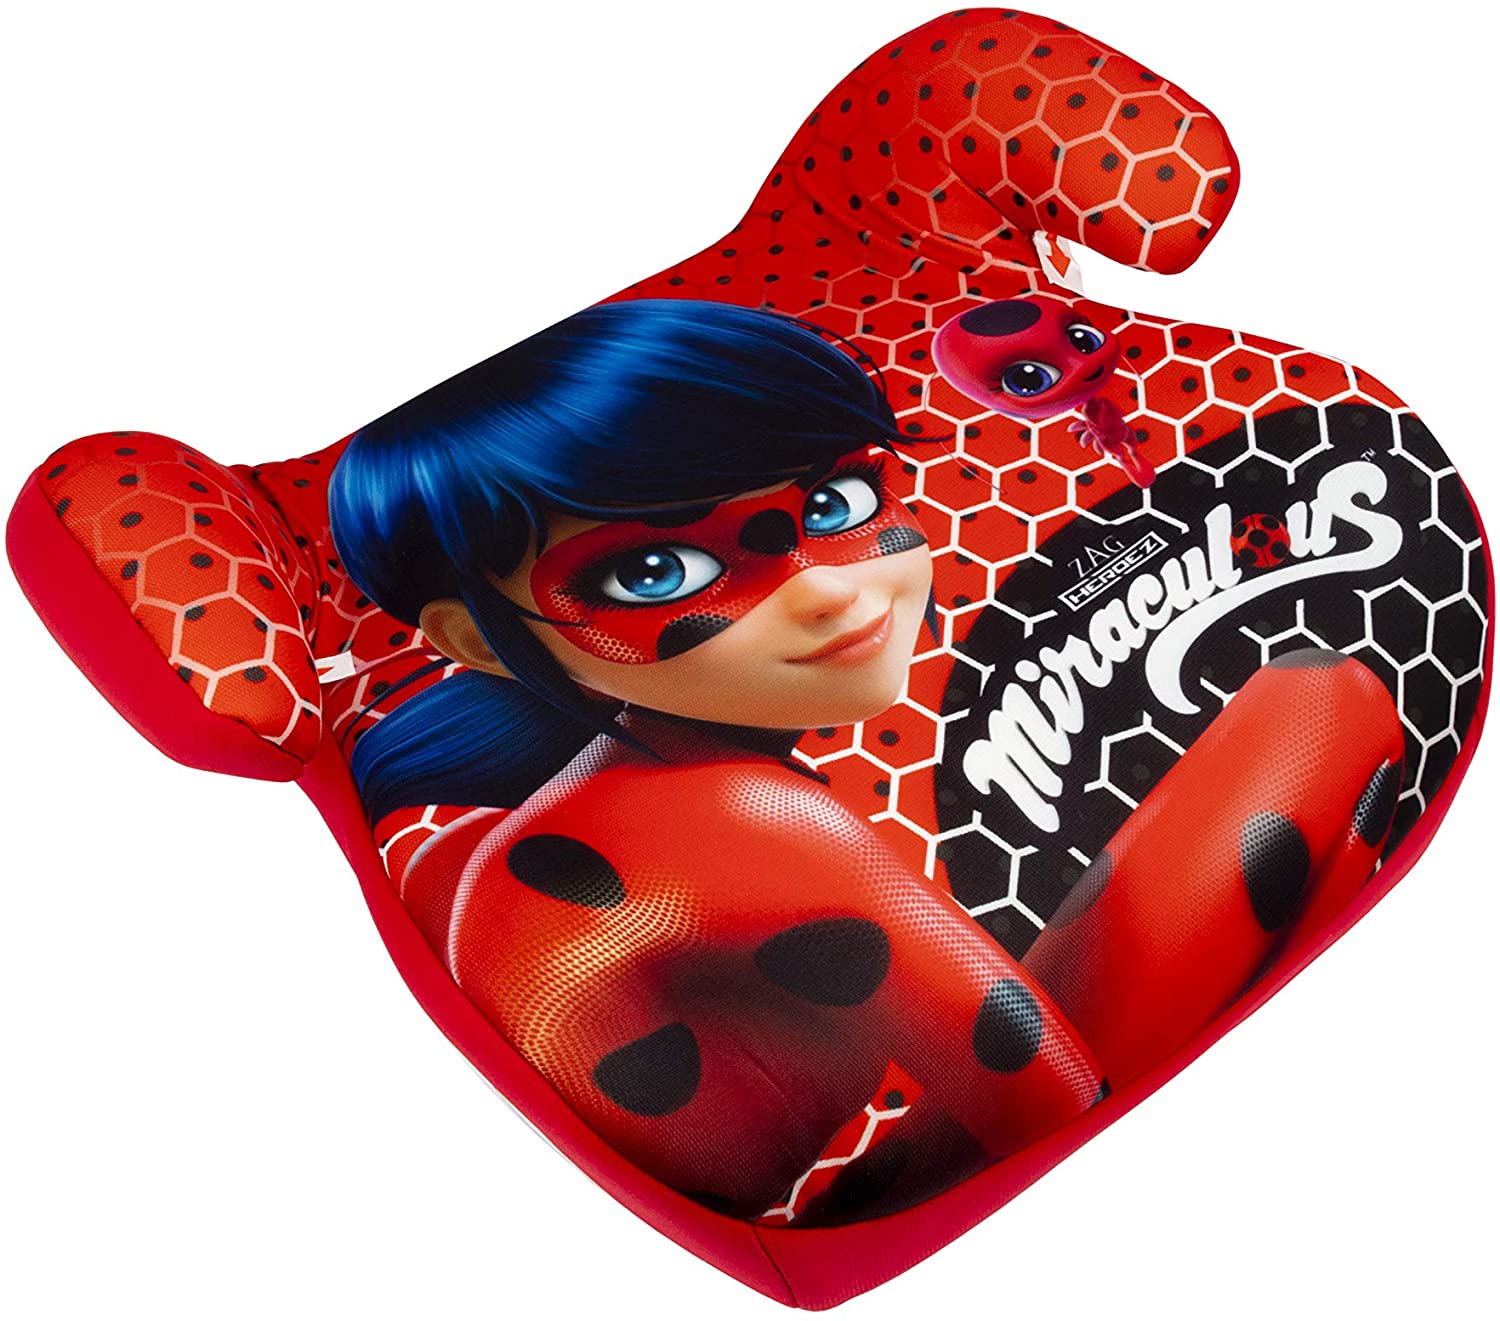 ABC PARTS Ladybug LADYB104 Universal Booster Seat Red